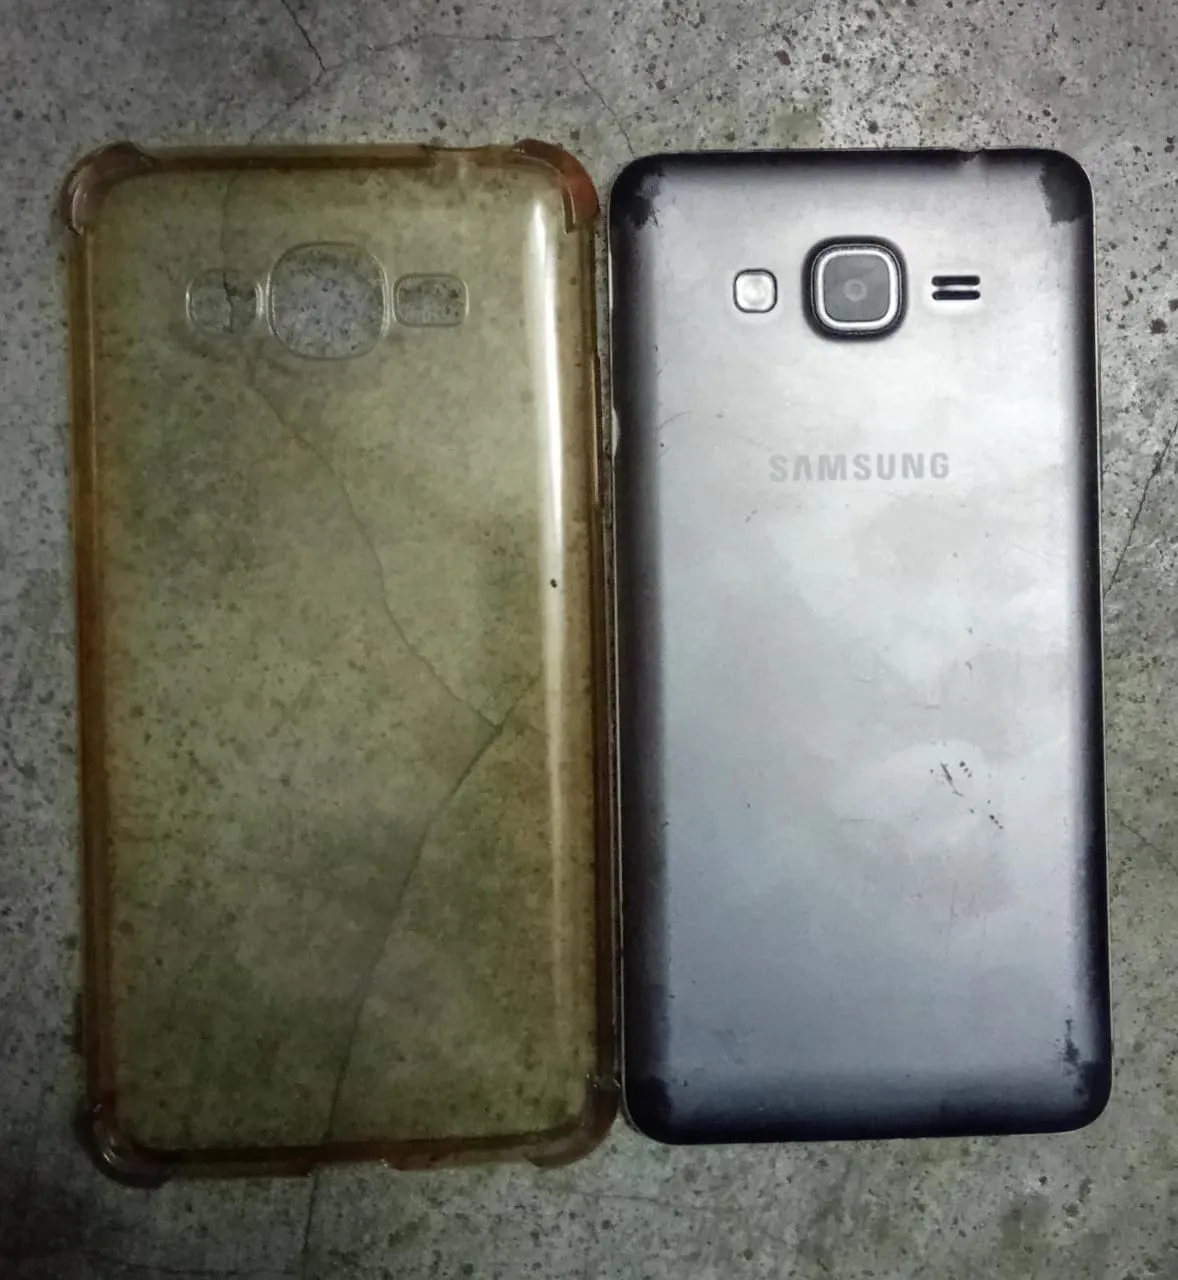 Samsung Galaxy Duo - photo 1